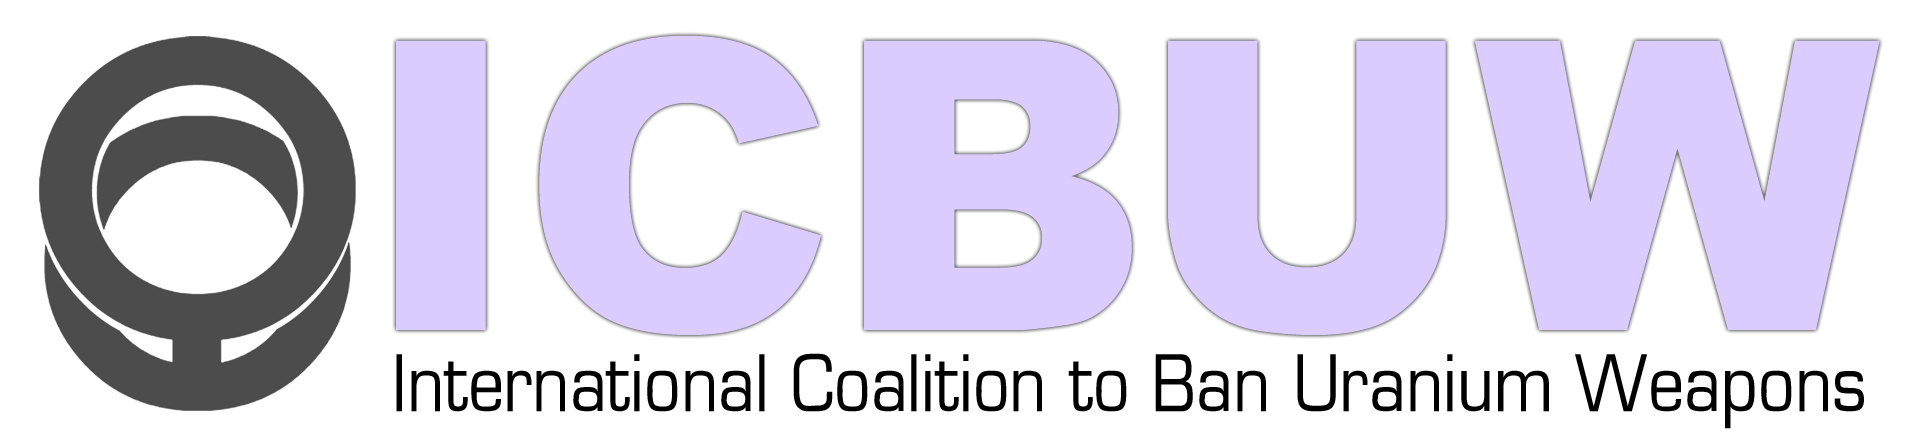 logo for International Coalition to Ban Uranium Weapons